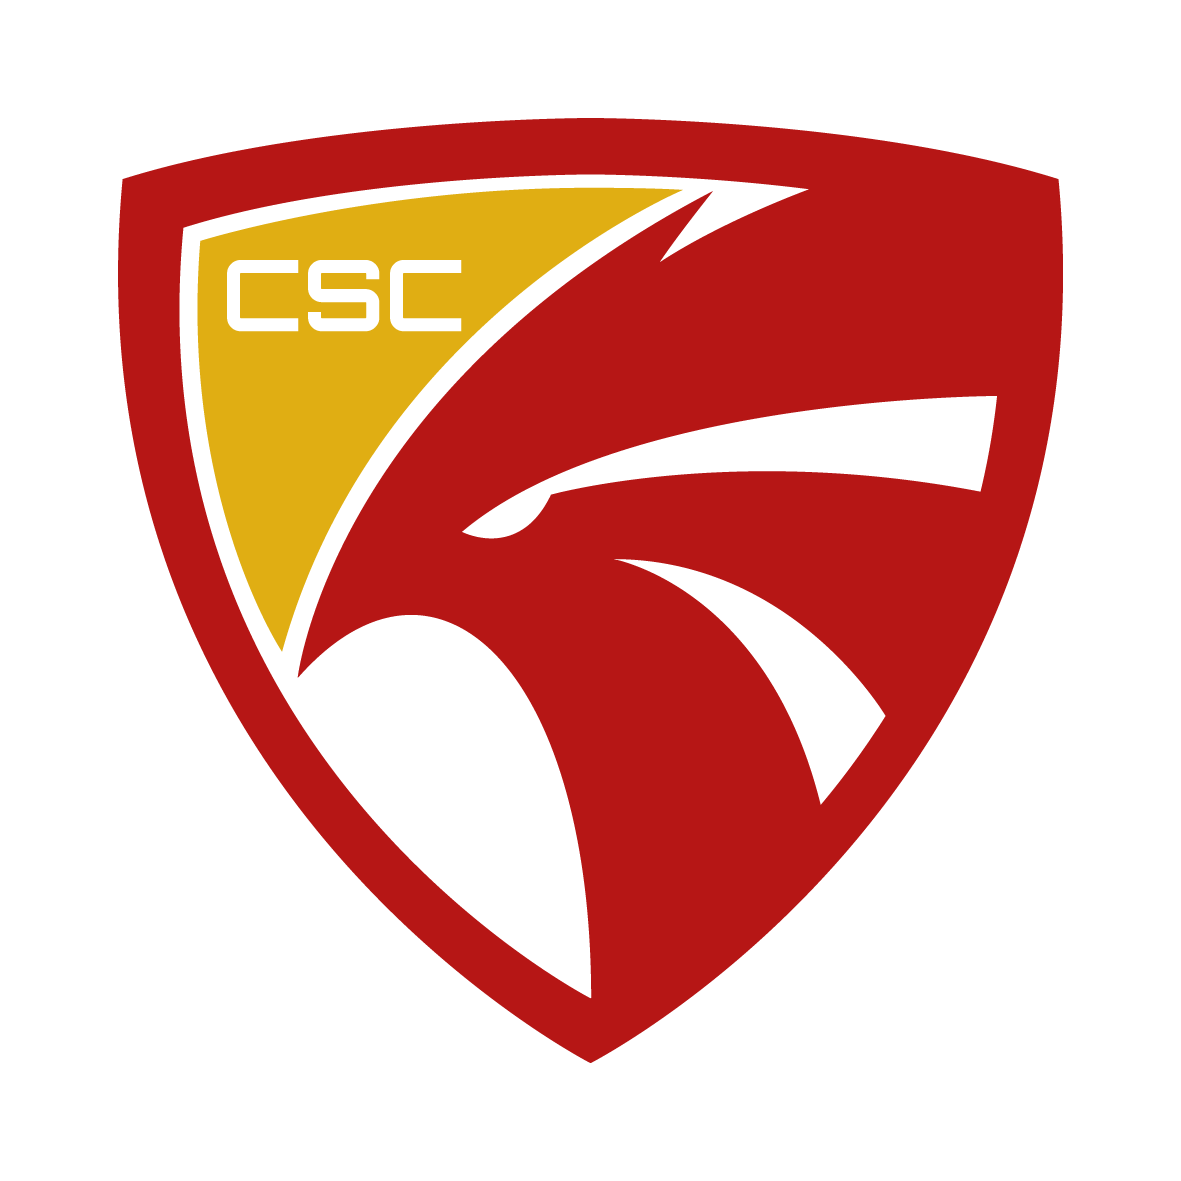 CSC Logo v2.6 - CMYK